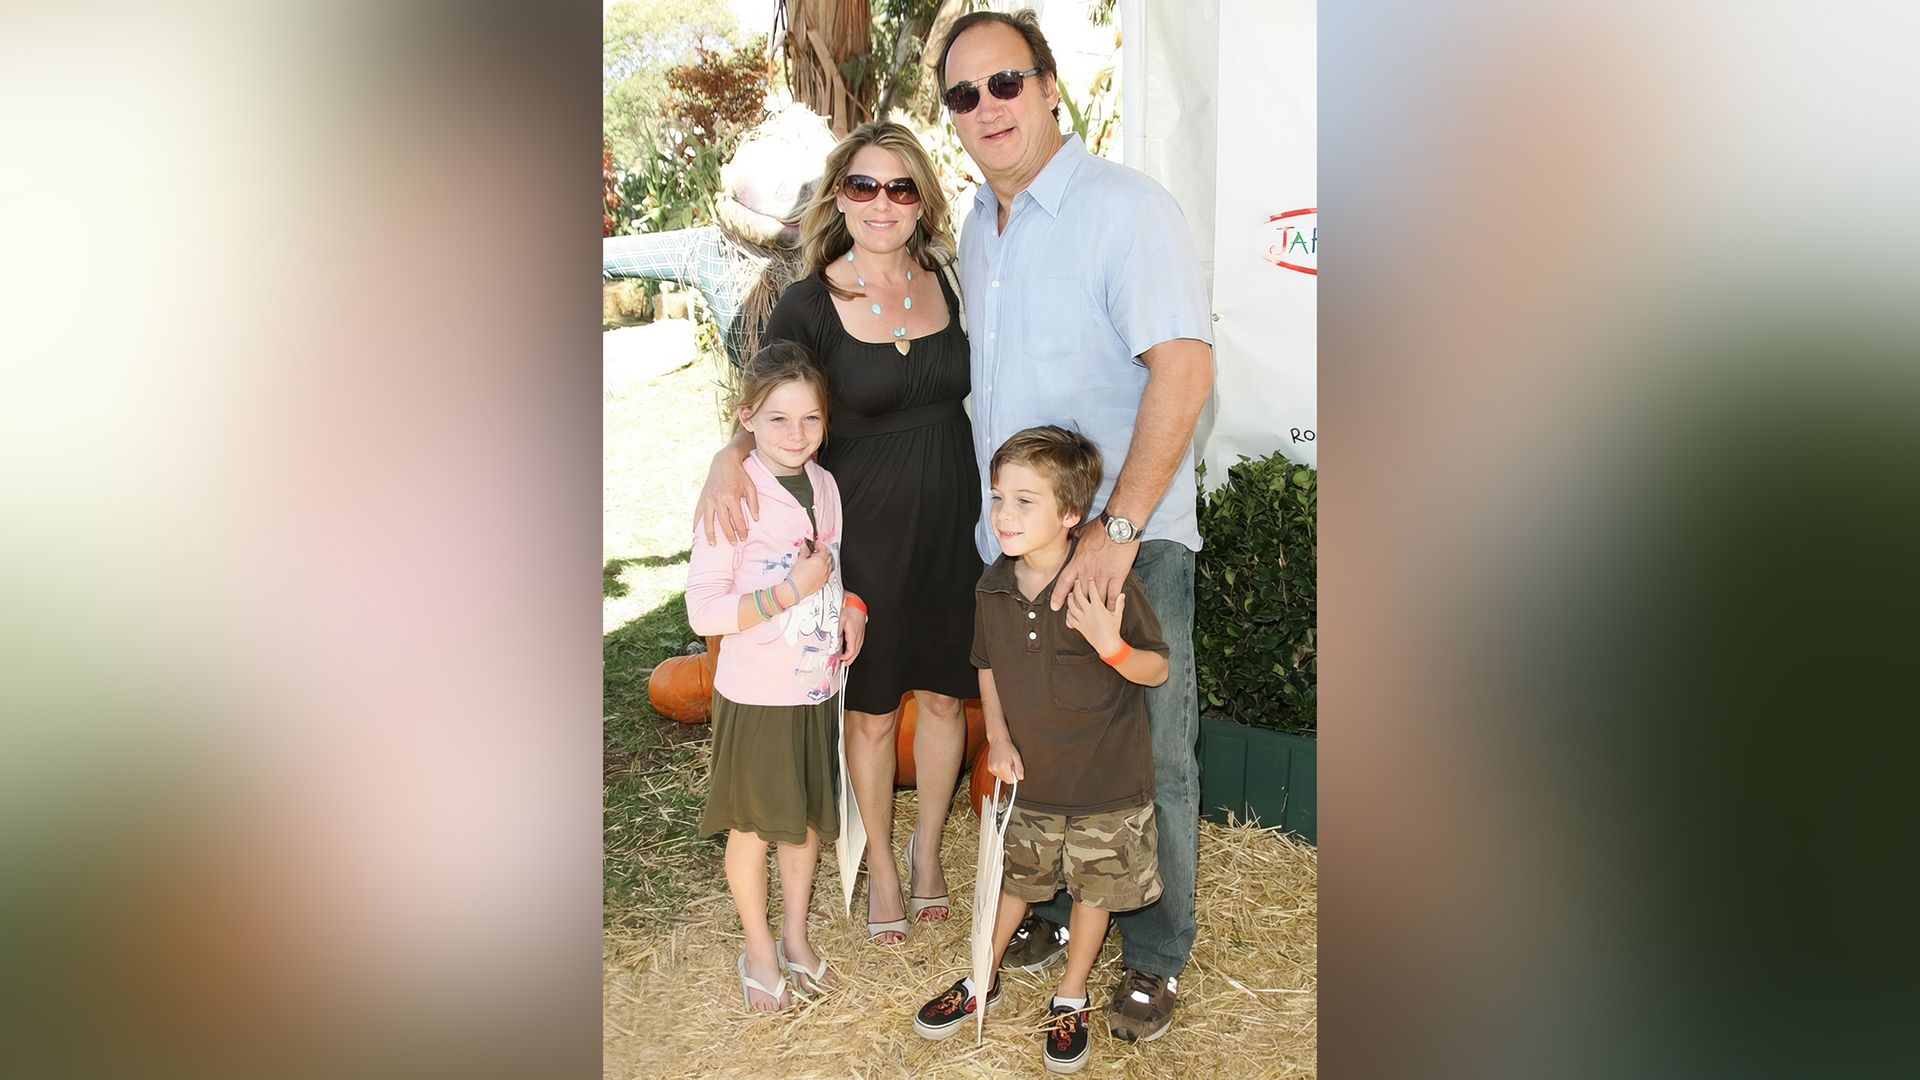 Jim Belushi and Jennifer Sloan with their children